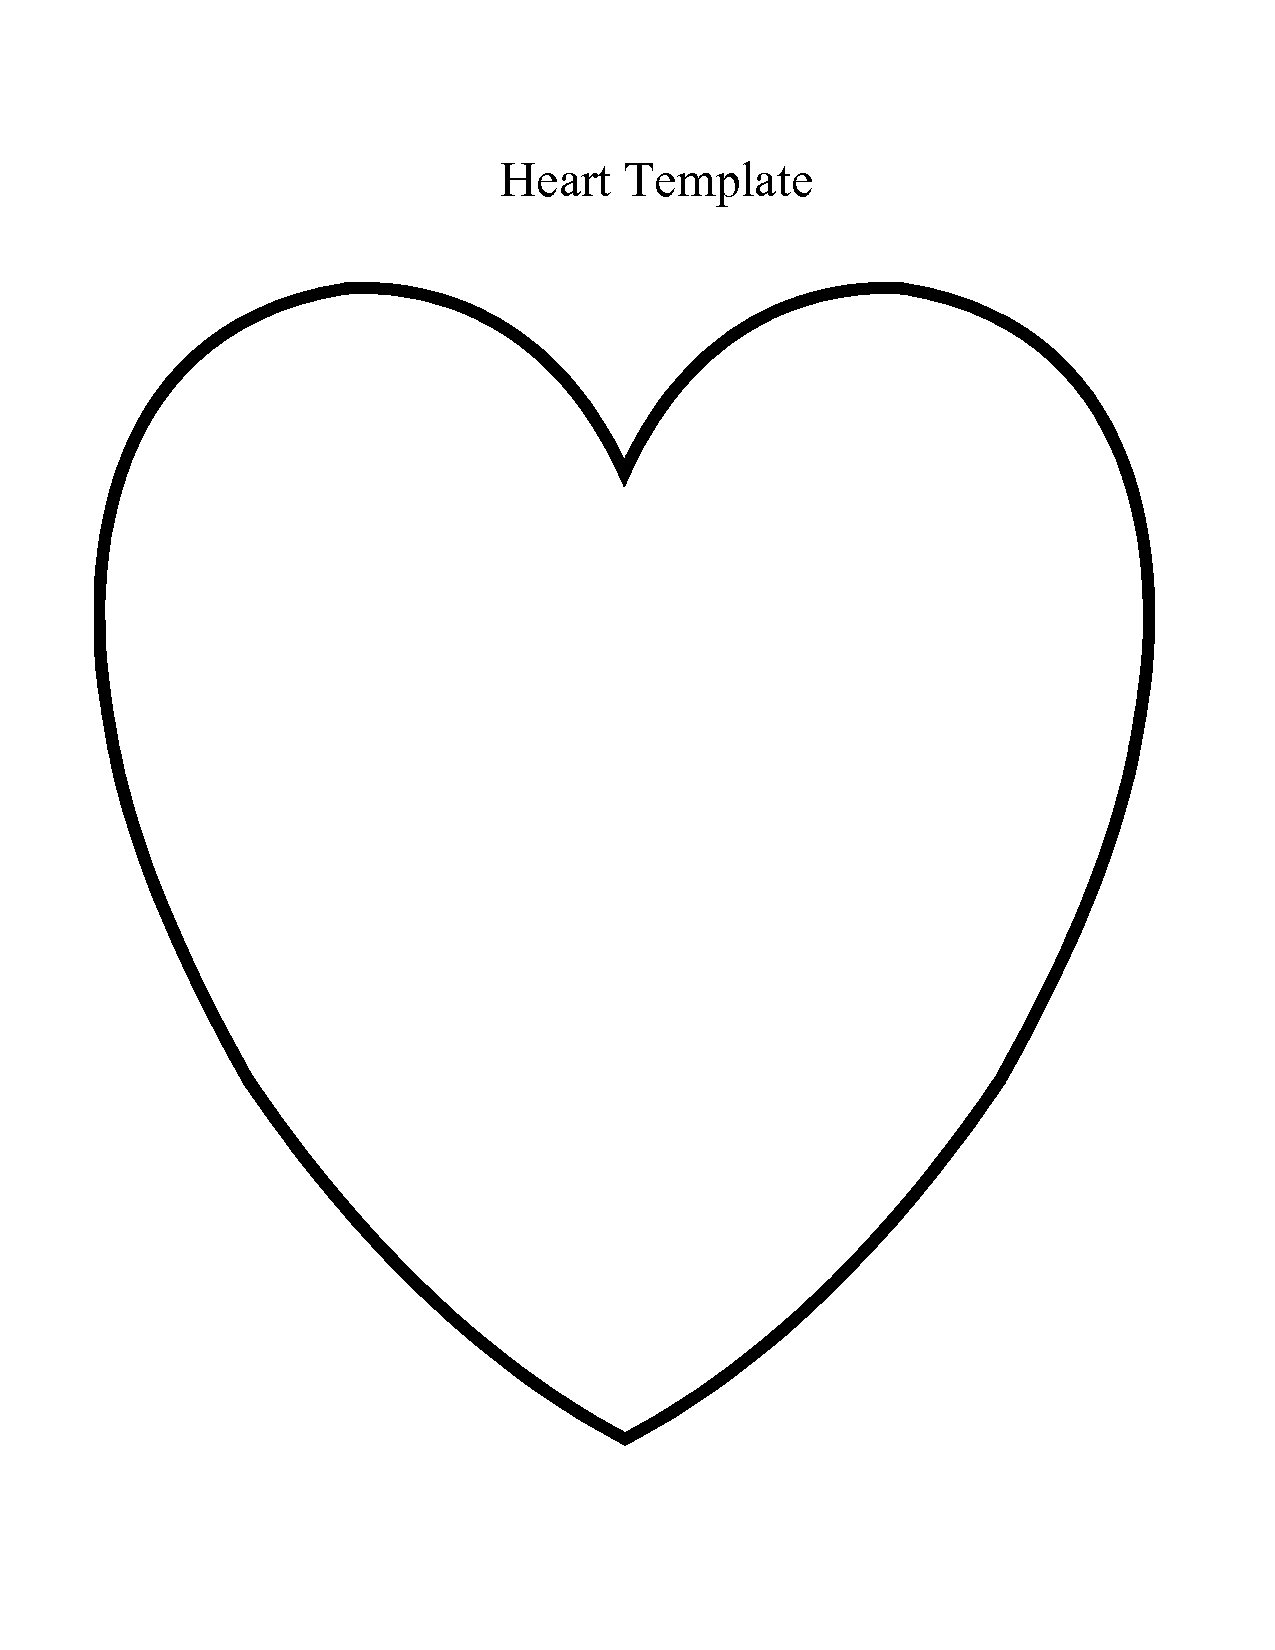 heart-templates-heart-template-heart-shapes-template-printable